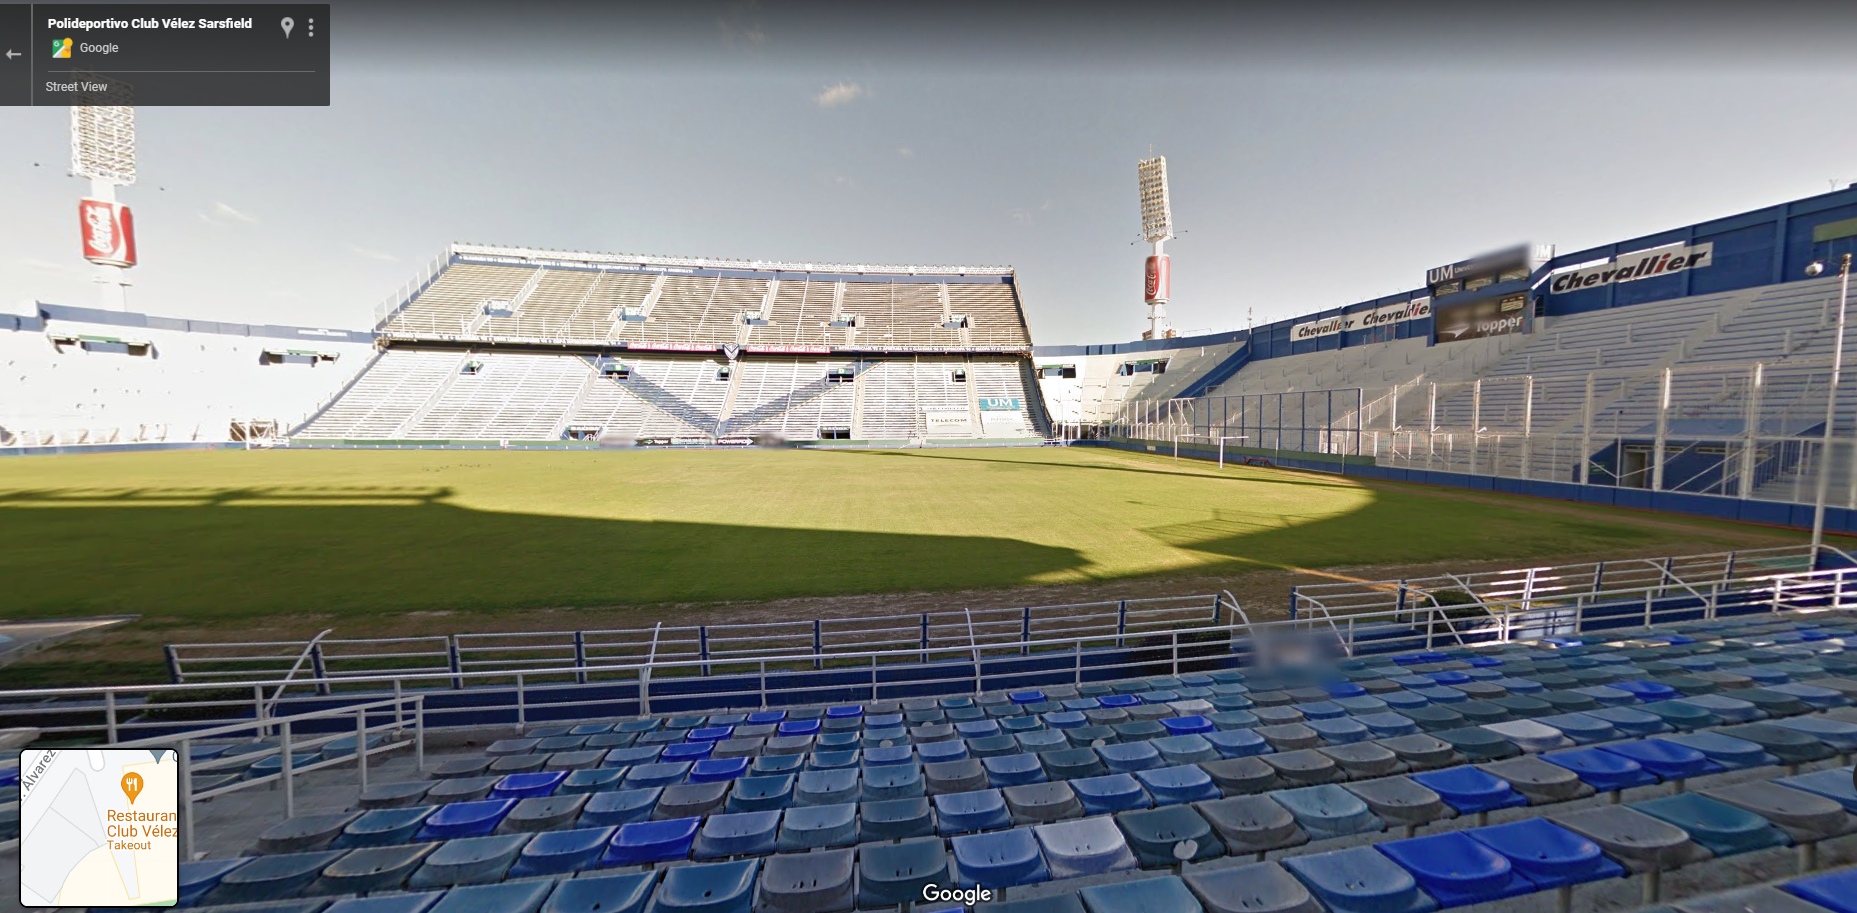 View of where I sat in Estadio José Amalfitani the stadium of the Argentine soccer club Vélez Sarsfield (image courtesy of Google Maps).